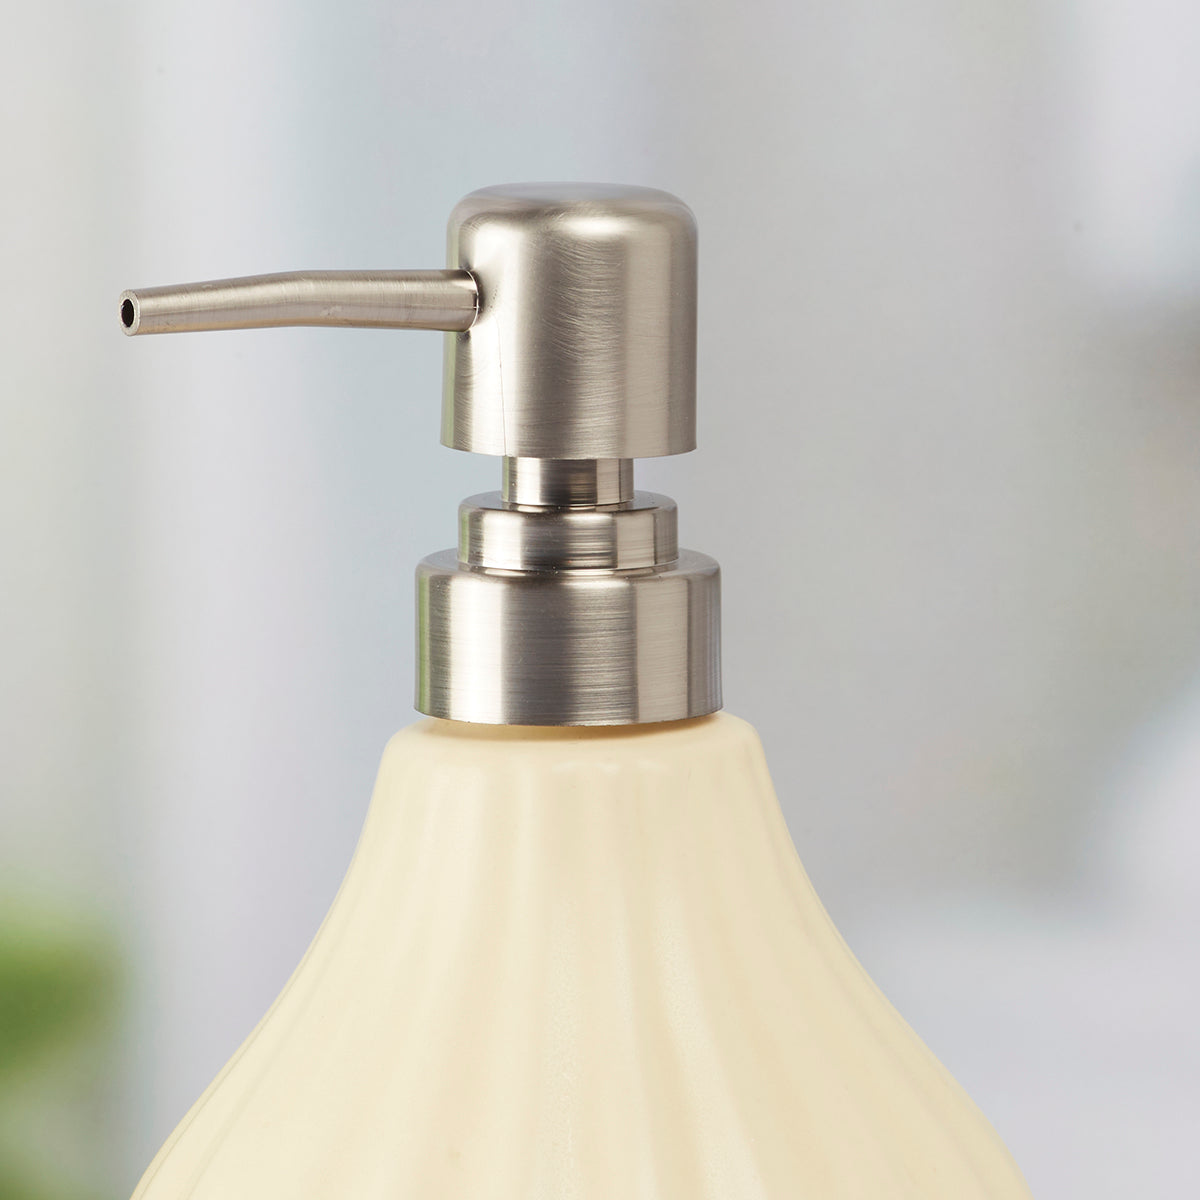 Ceramic Soap Dispenser Pump for Bathroom for Bath Gel, Lotion, Shampoo (8645)